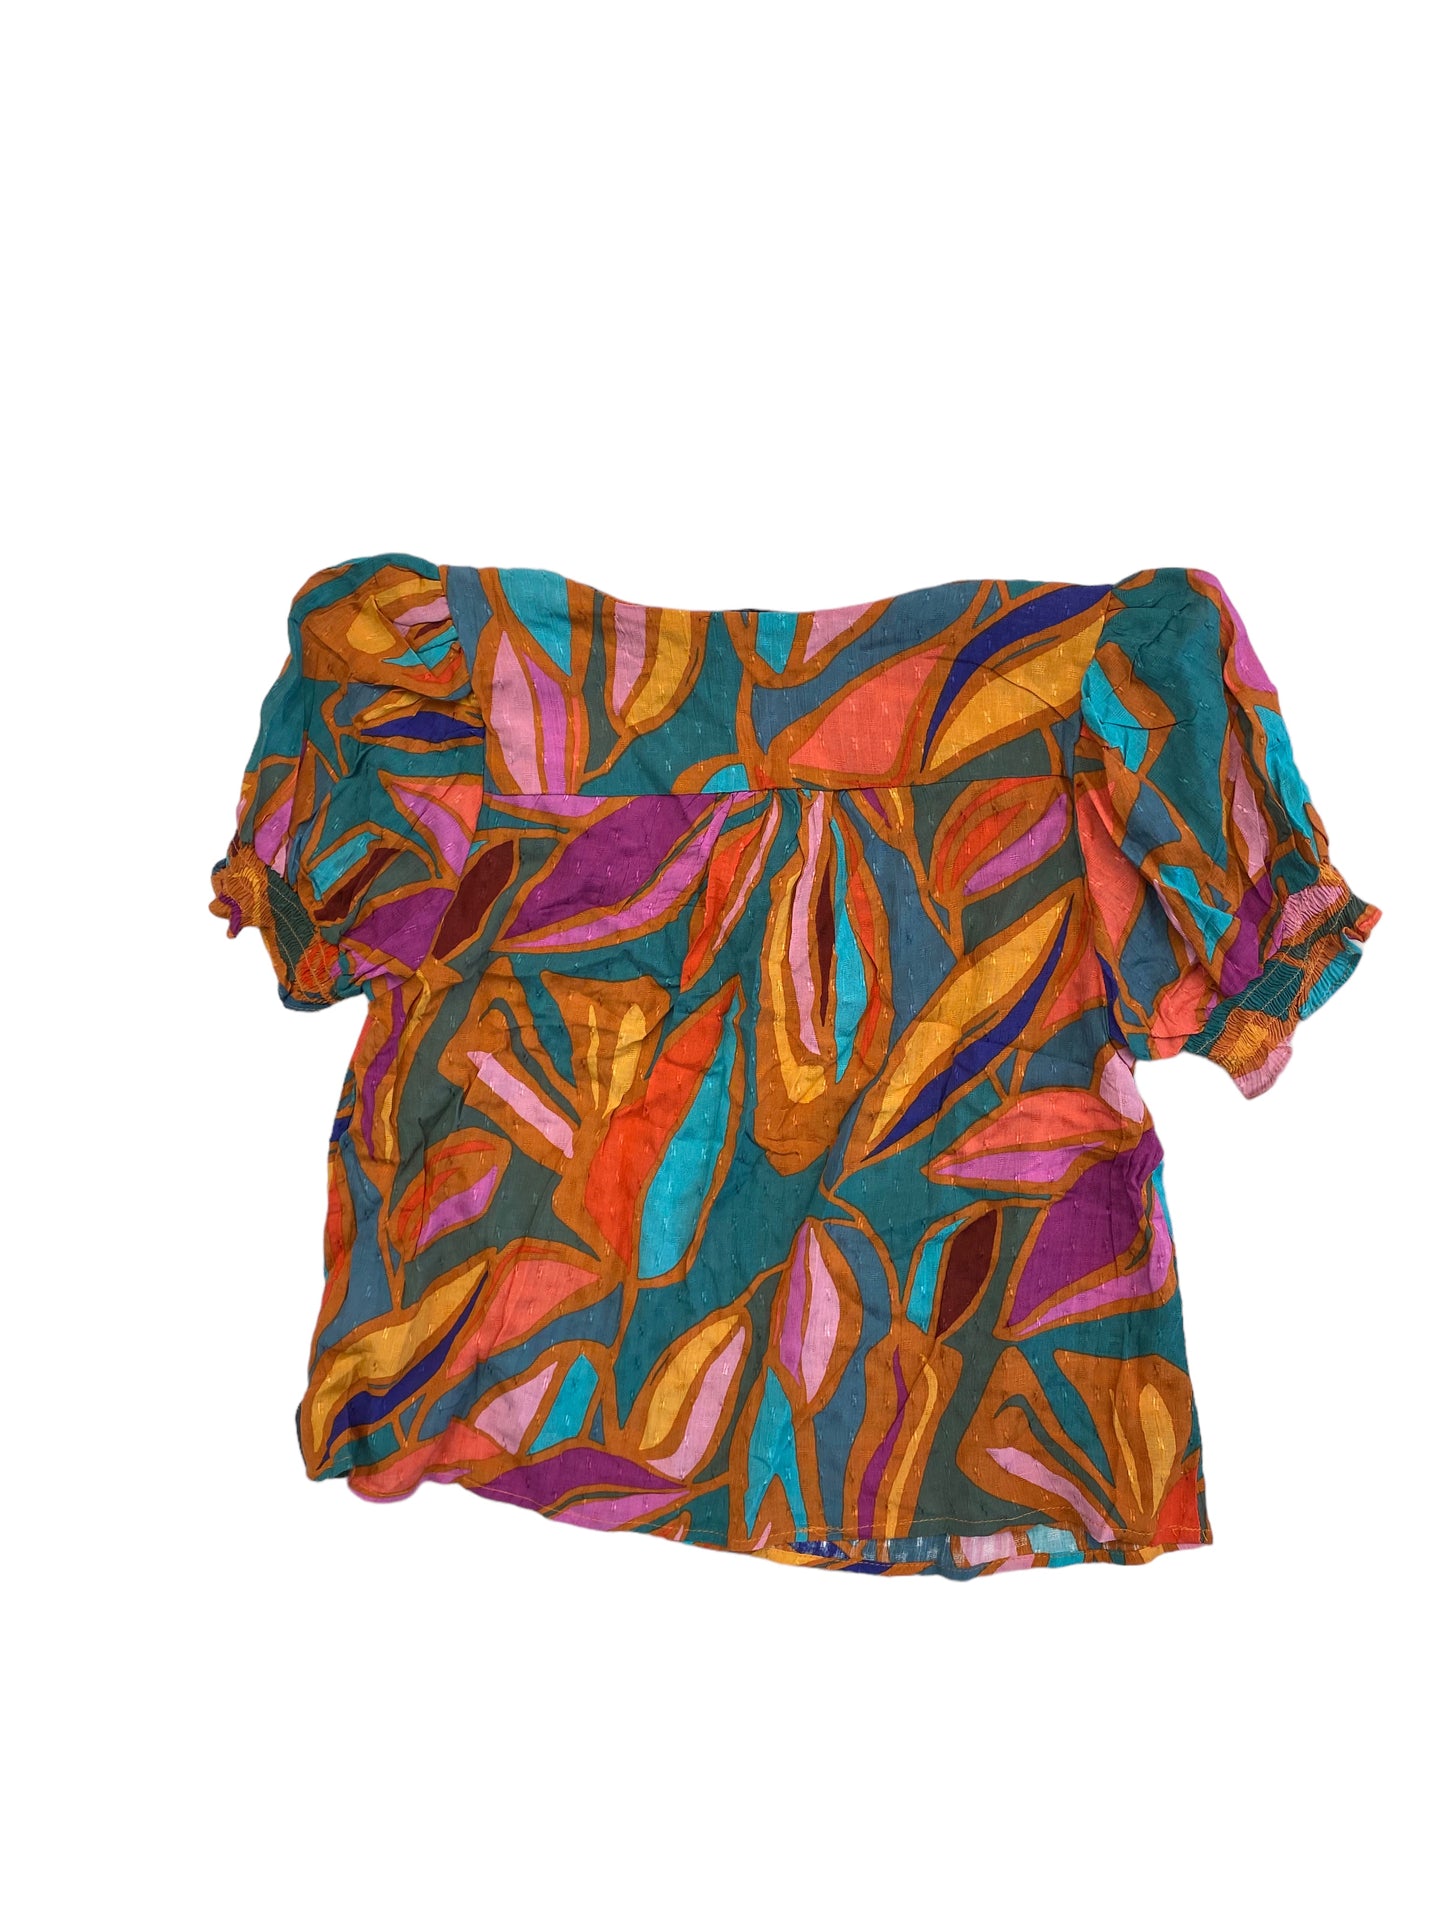 Multi-colored Top Short Sleeve Rachel Roy, Size M